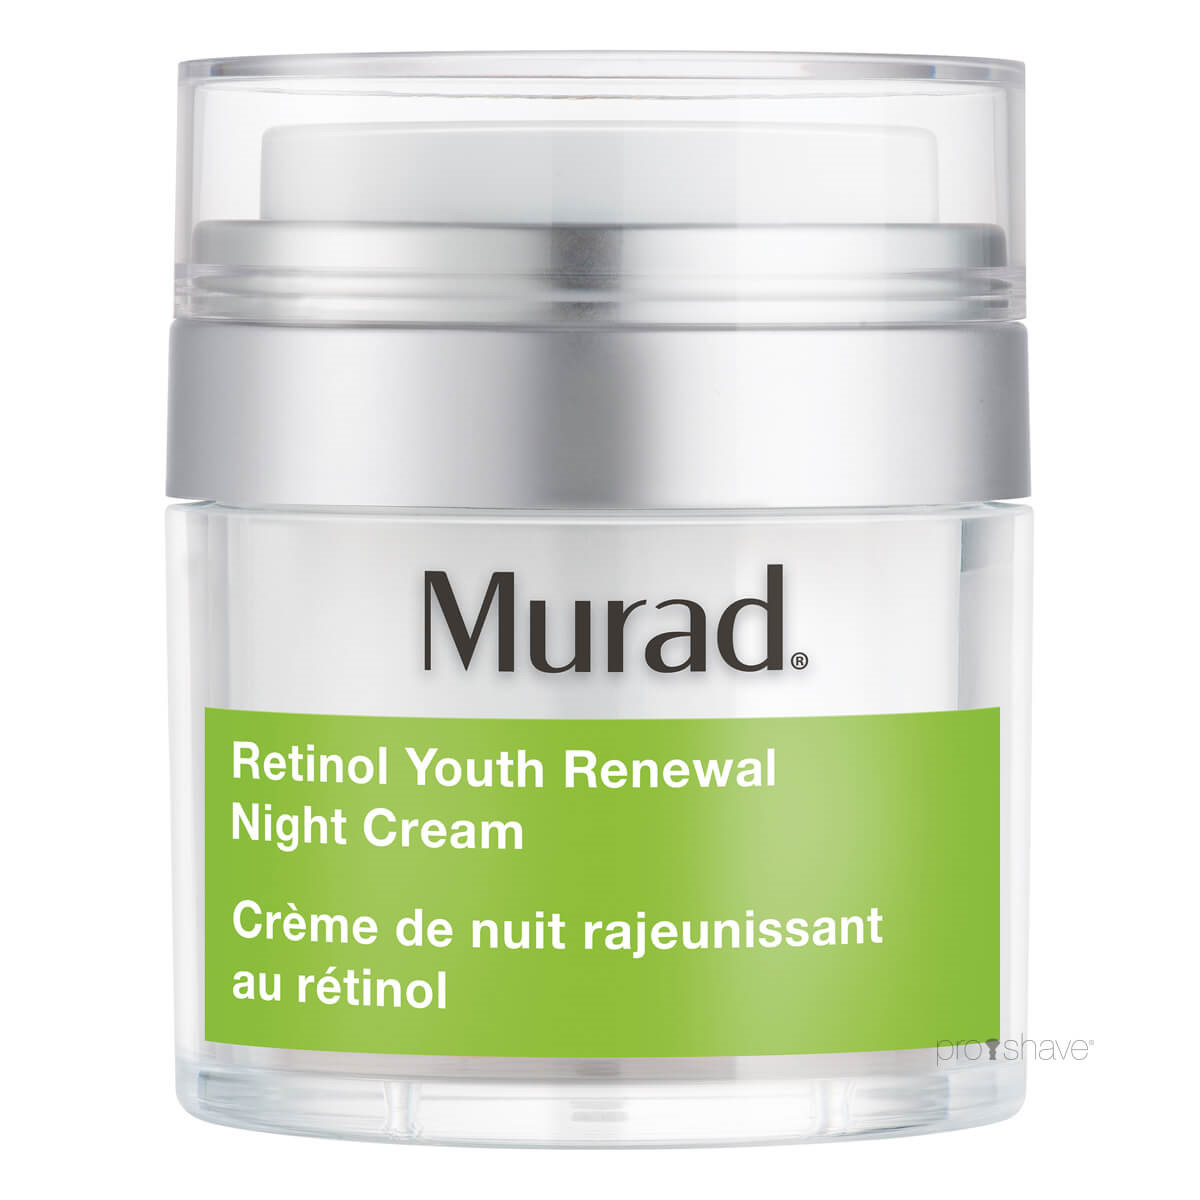 Billede af Murad Retinol Youth Renewal Night Cream, Resurgence, 50 ml. hos Proshave